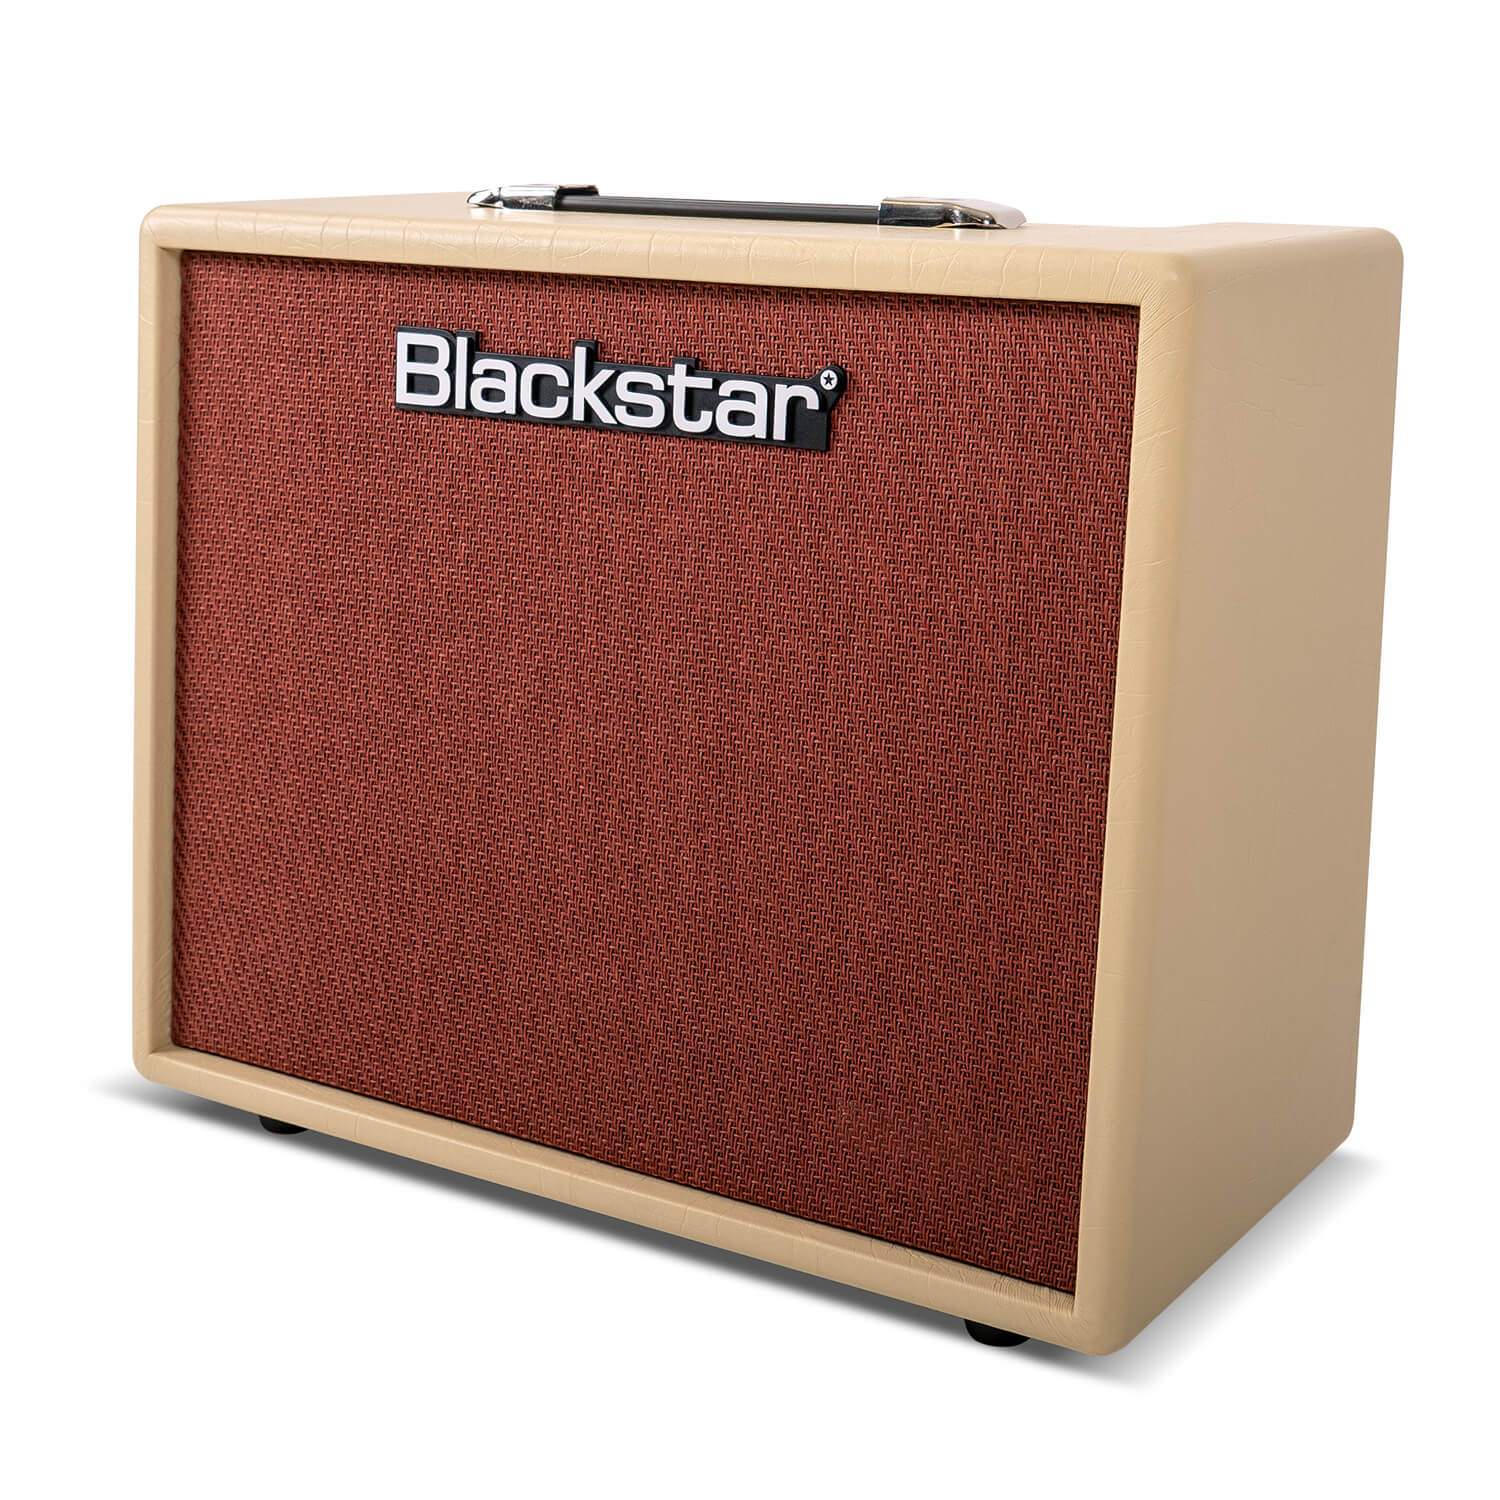 Blackstar Debut 50R (Cream/Oxblood)